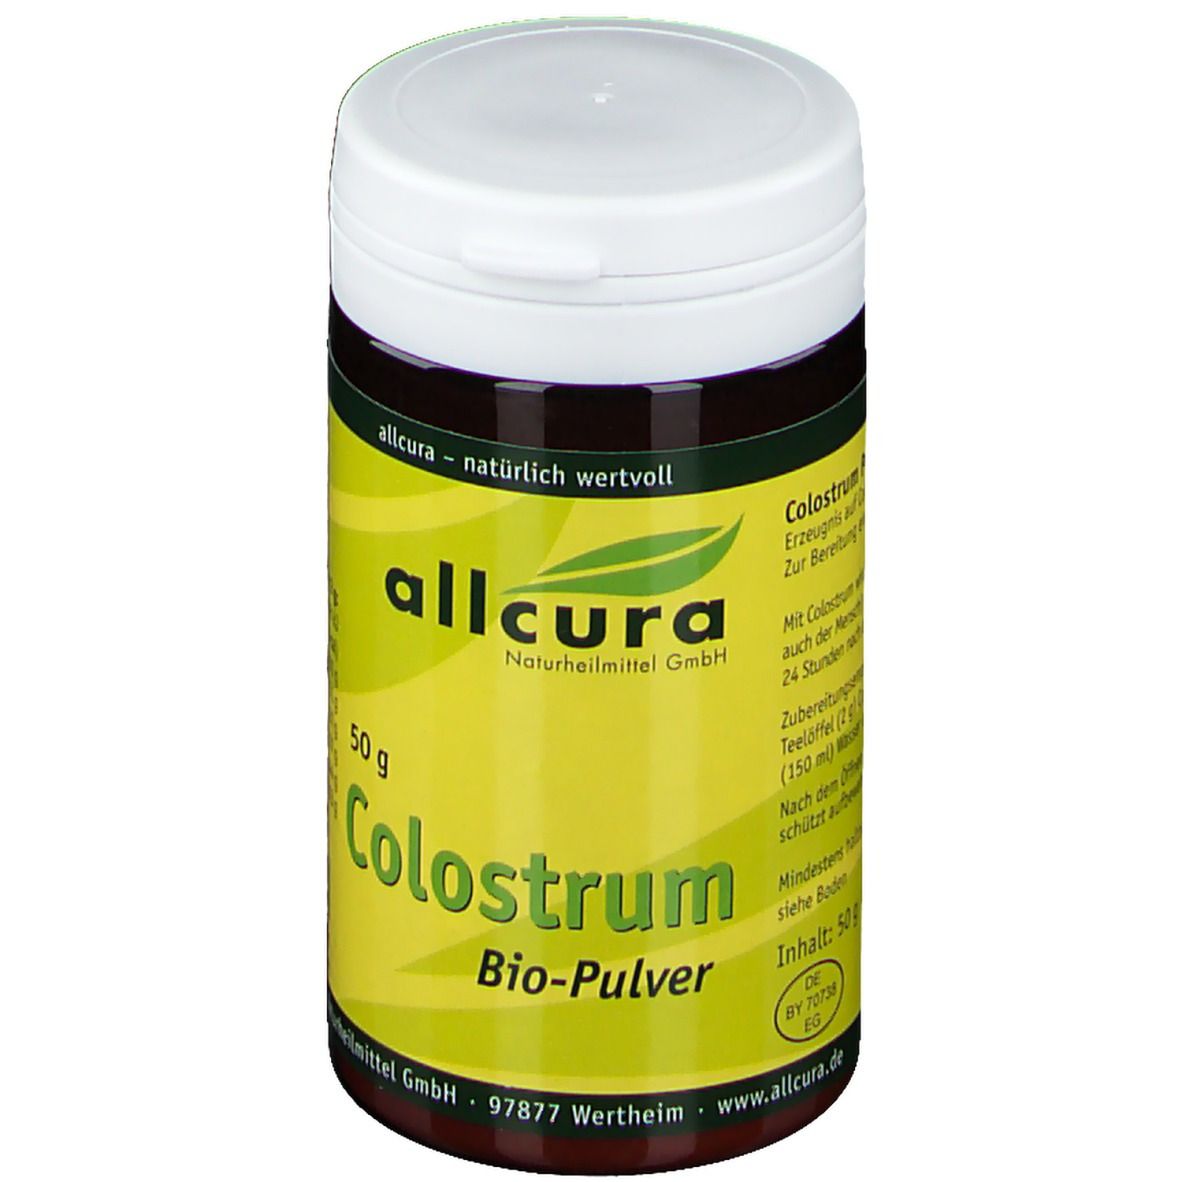 allcura Colostrum Bio-Pulver